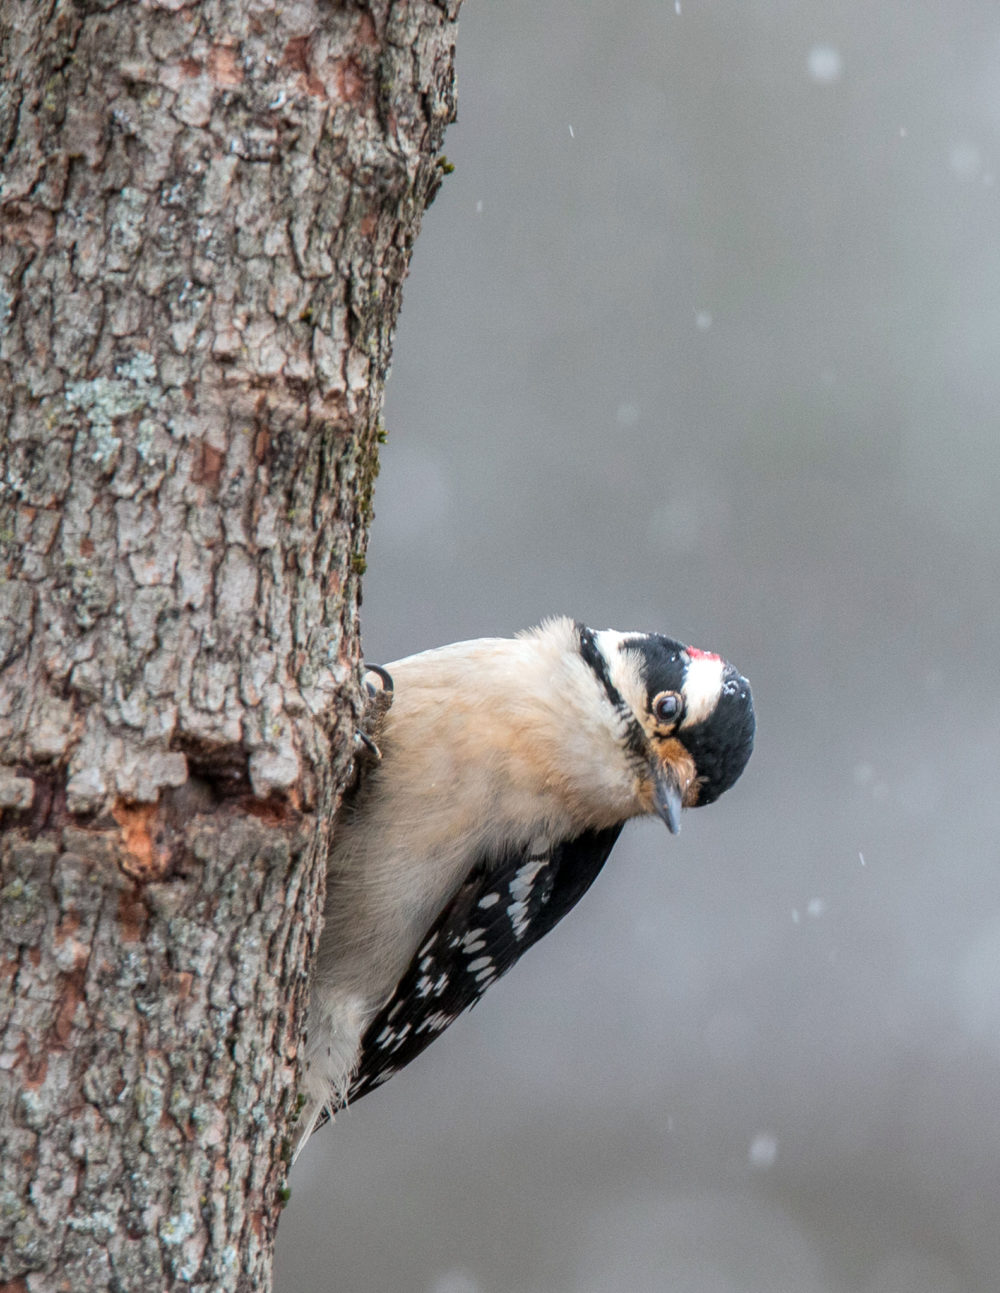 A downy woodpecker peers toward the camera from a tree